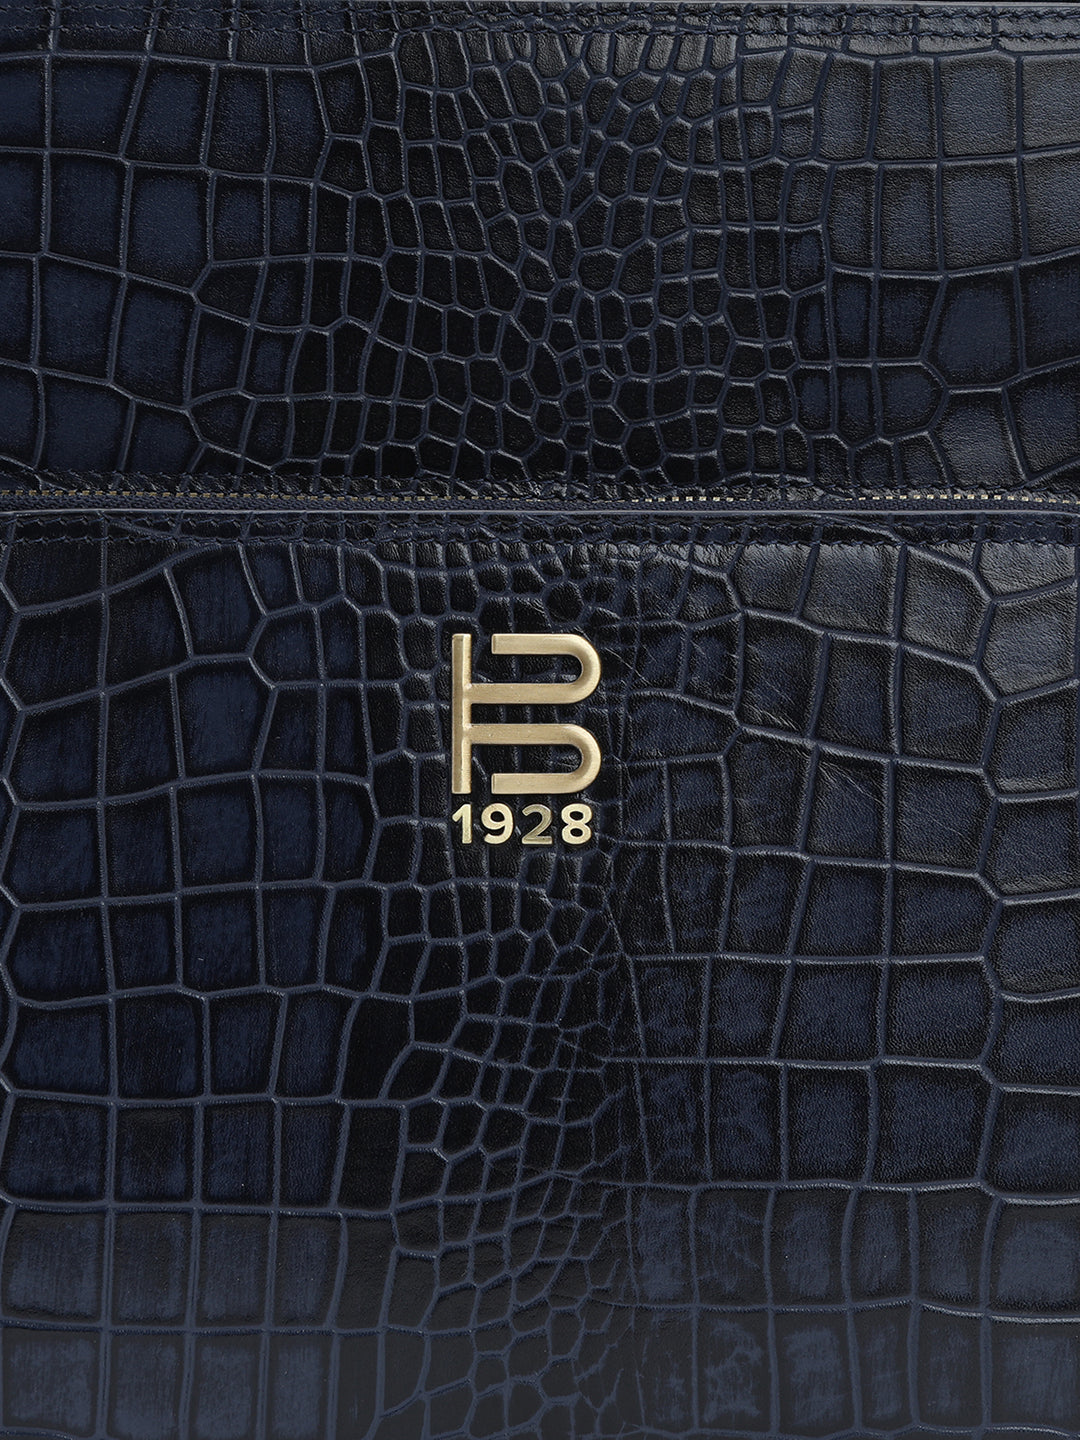 BAGATT Solofra Blue Leather Bagpack